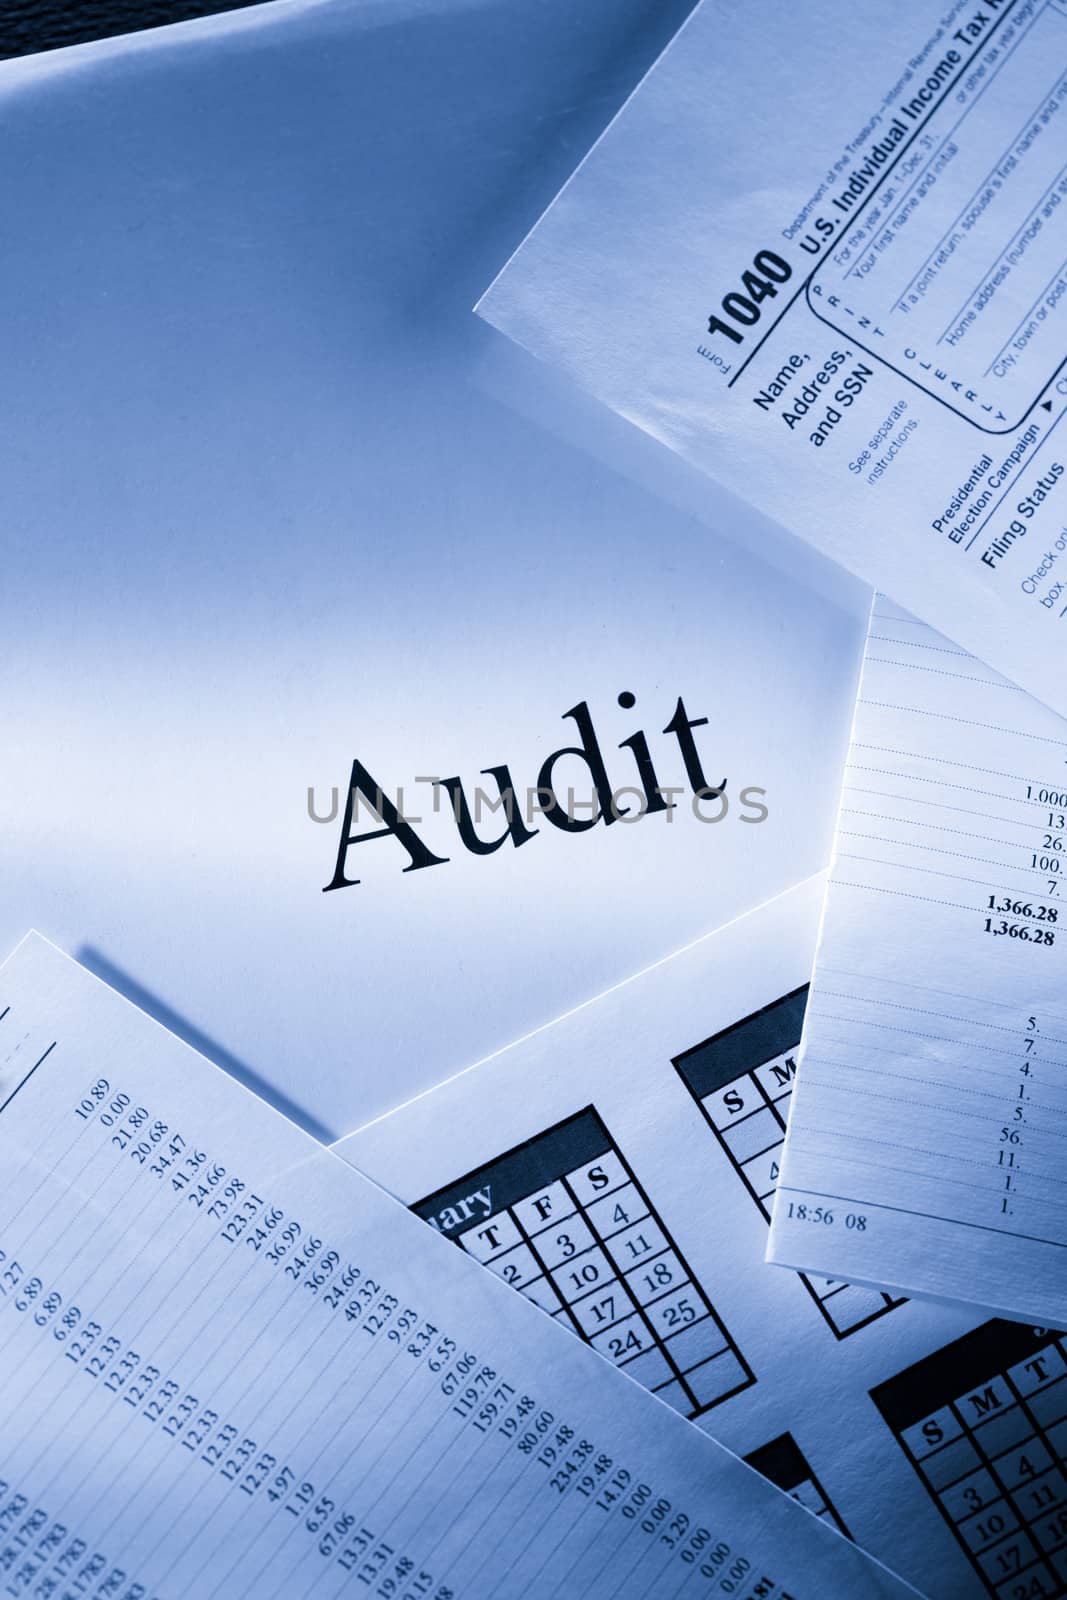 Operating budget, calendar and audit